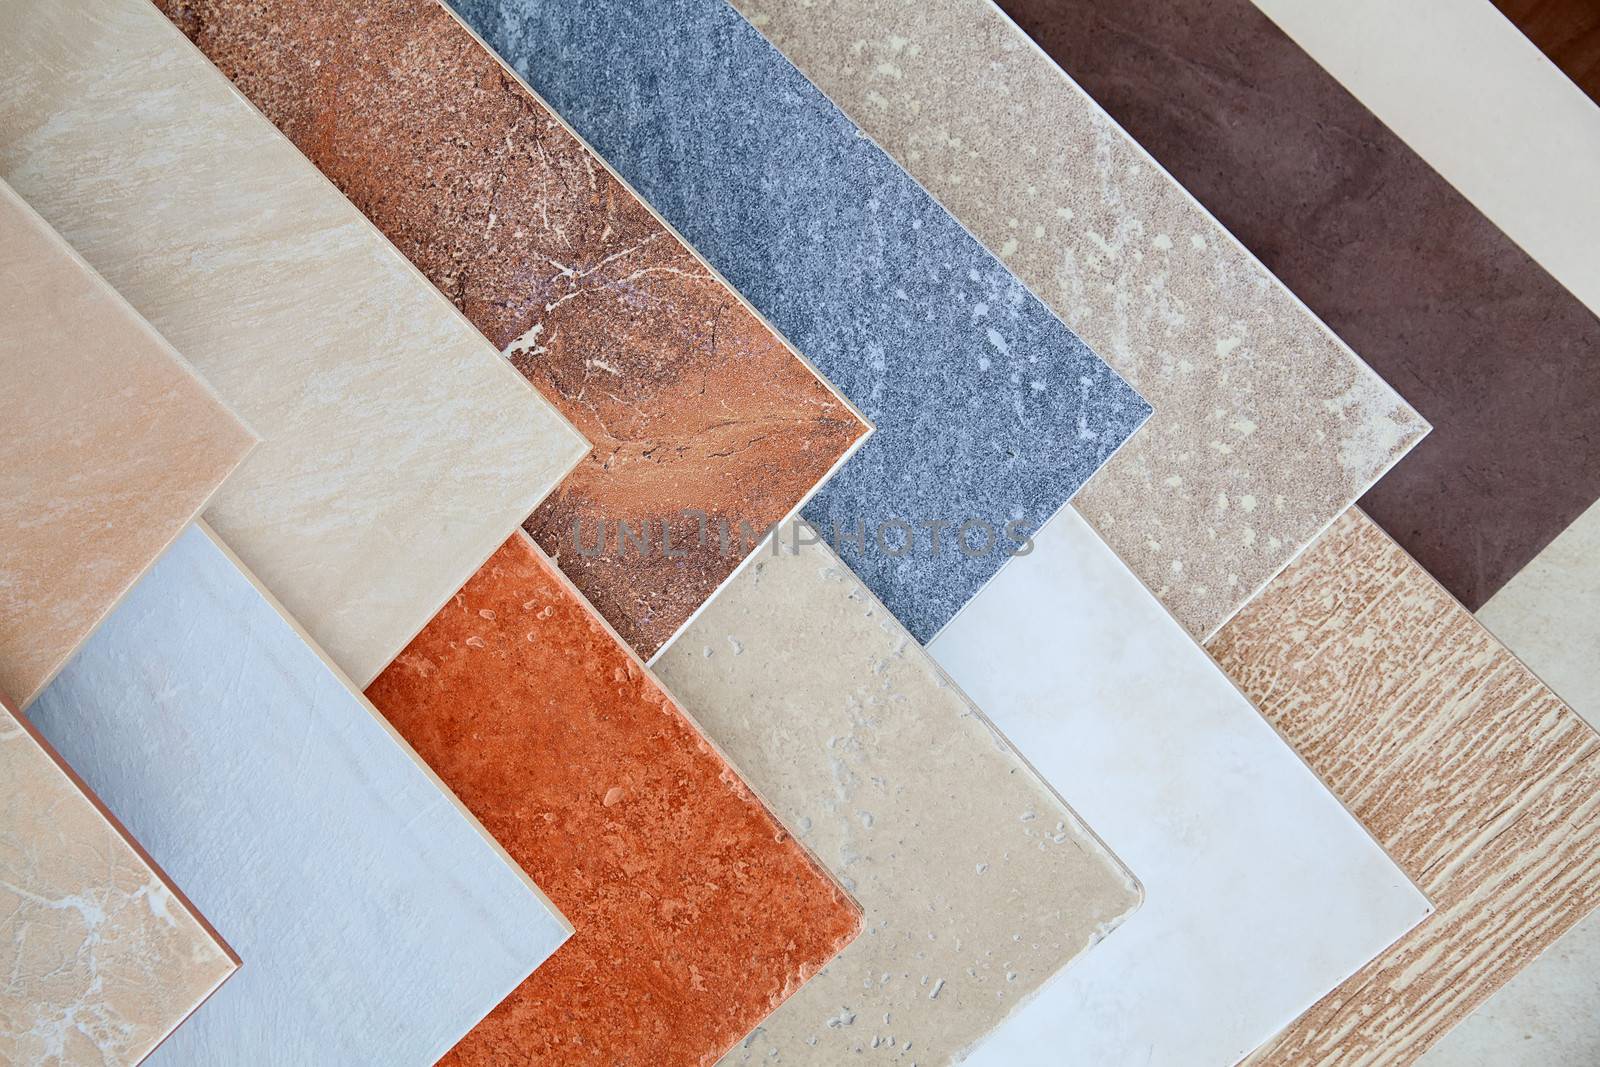 Samples of a ceramic tile in shop